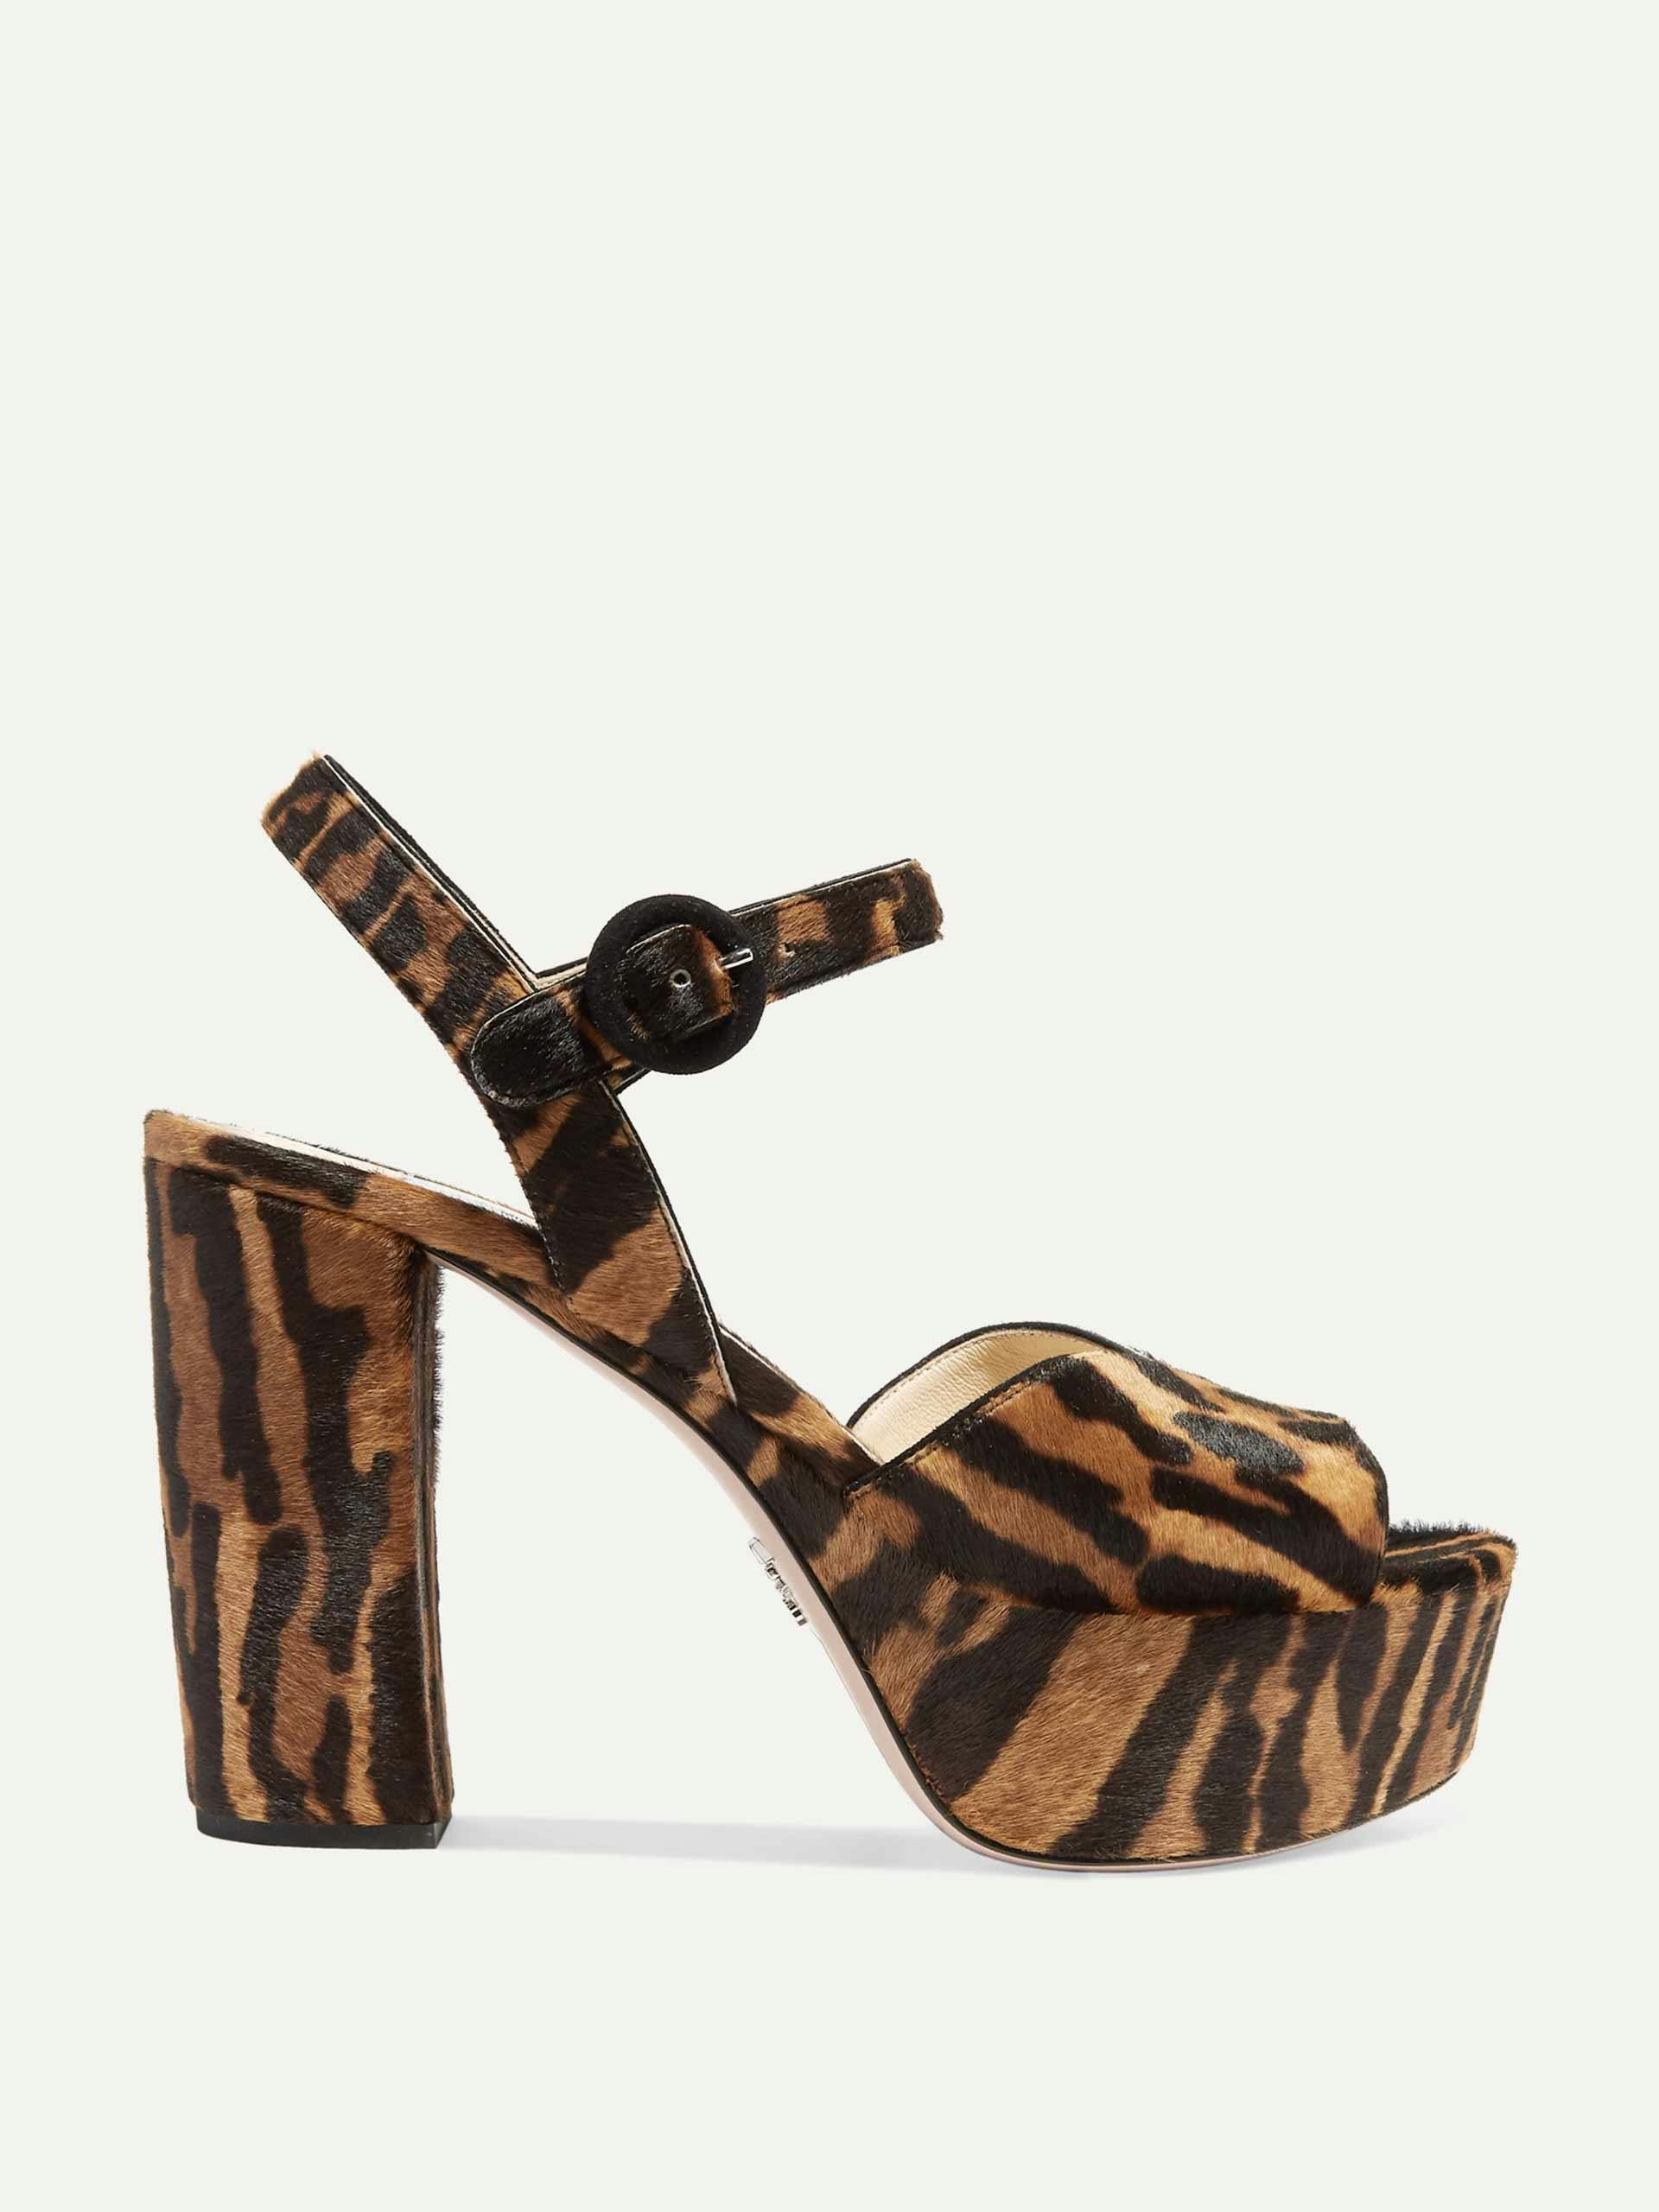 Leopard-print platform sandals